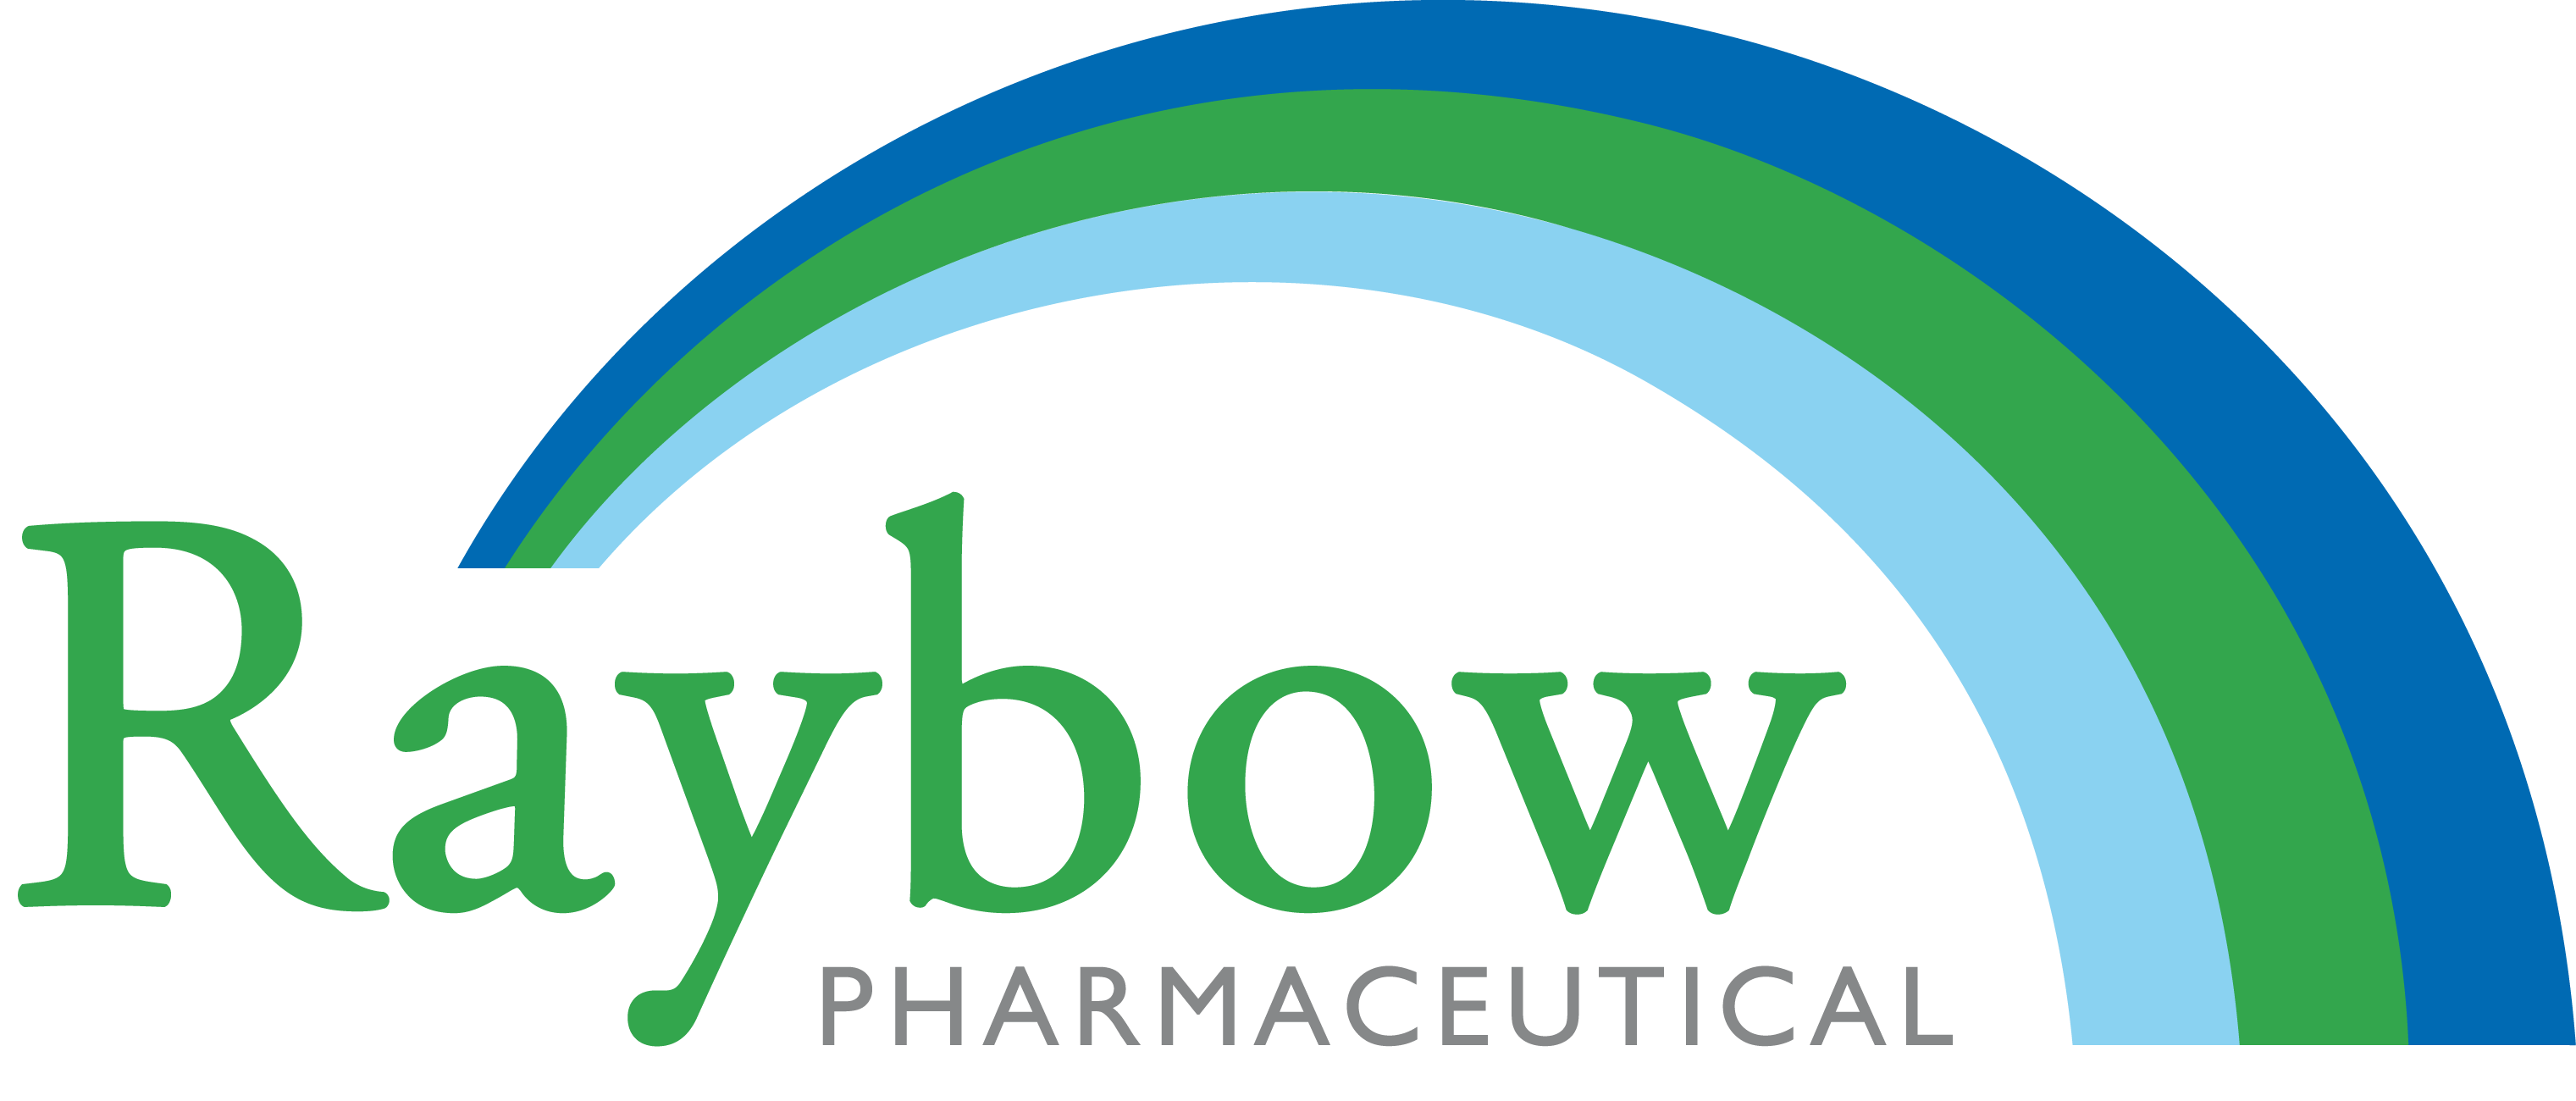 Raybow Pharmaceuticals